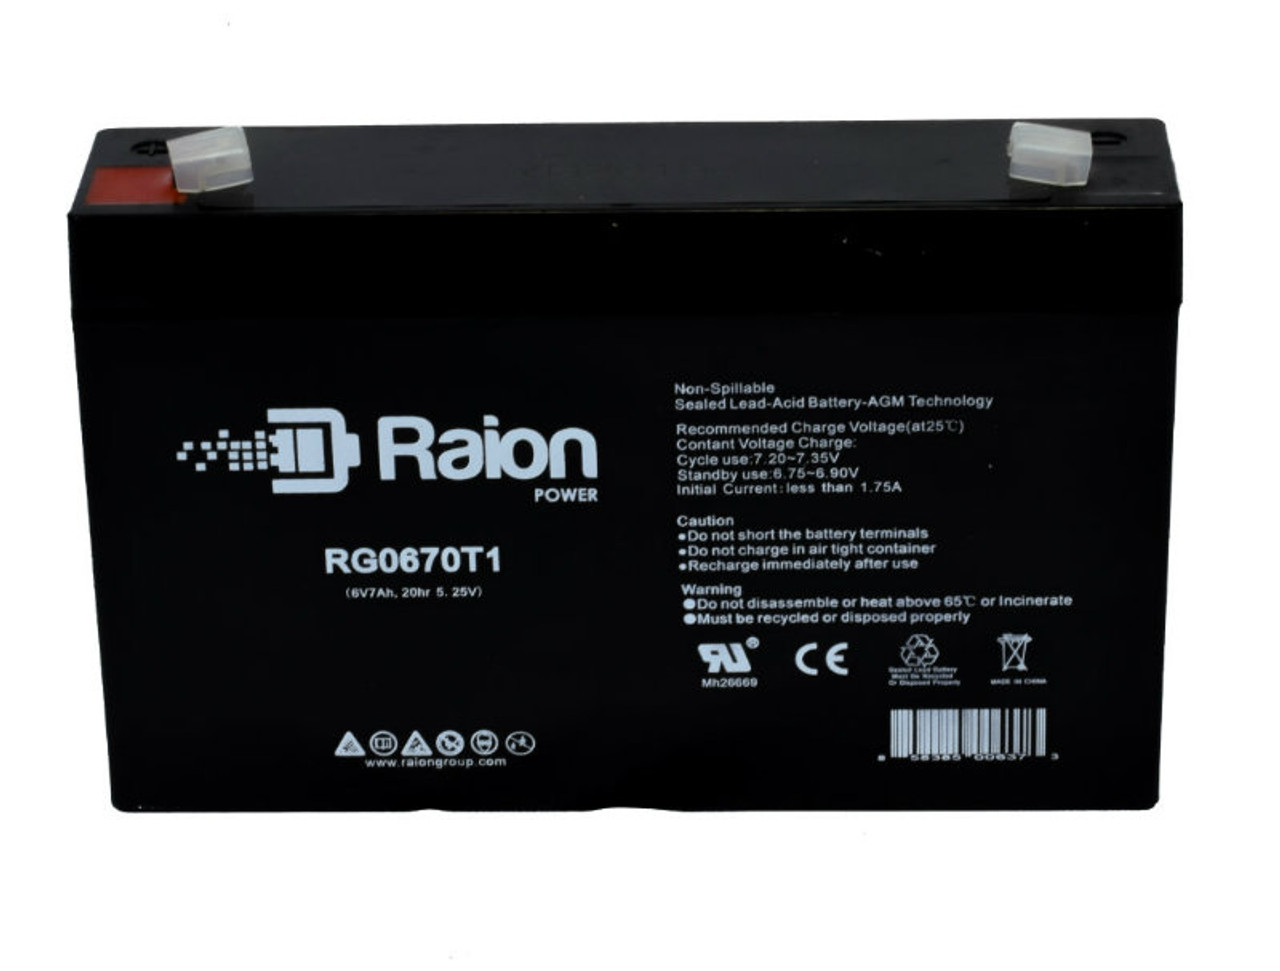 Raion Power RG0670T1 SLA Battery for Napel NP675 OEM Battery